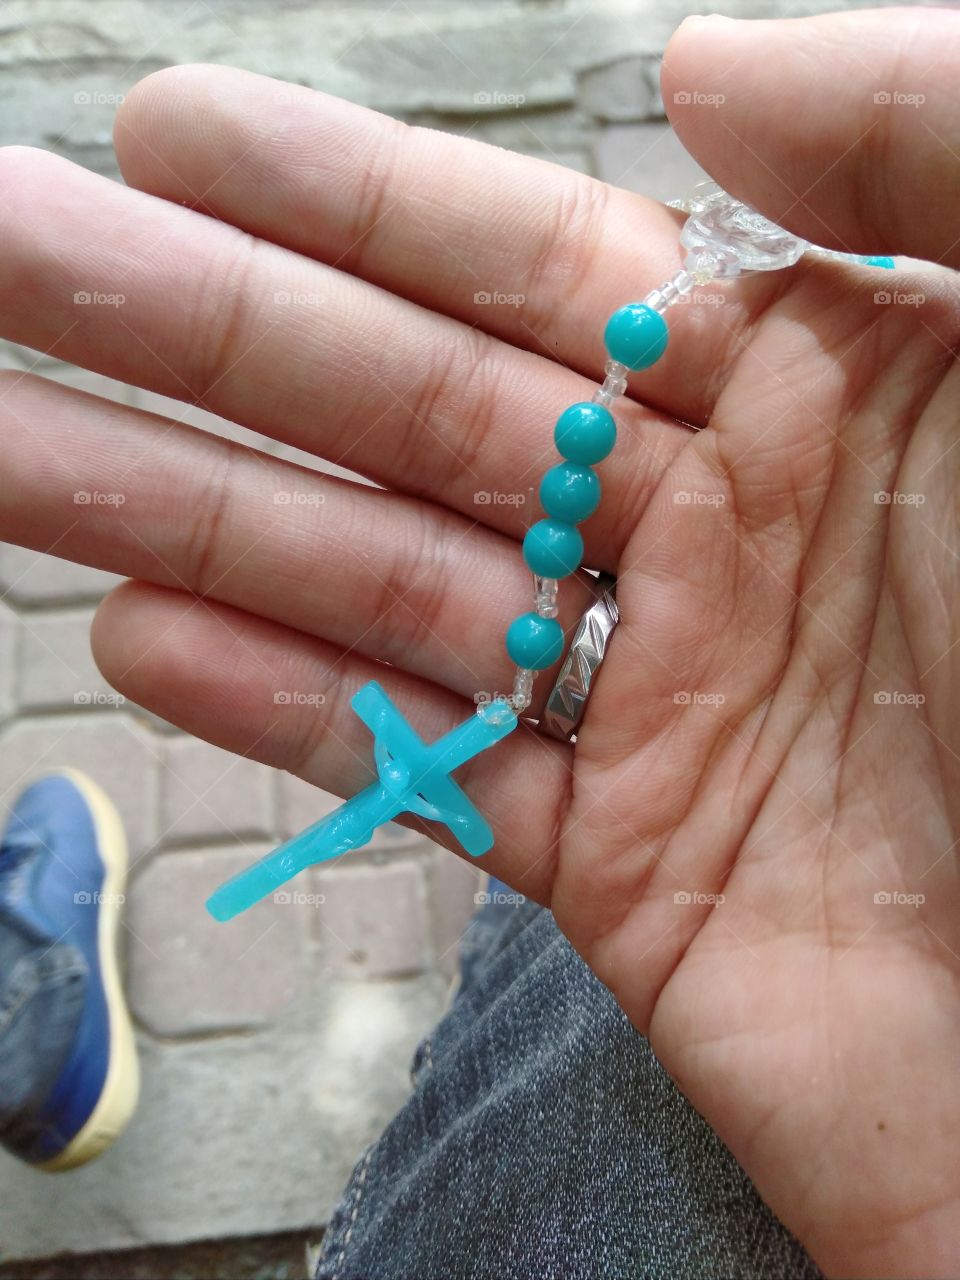 Always pray the Rosary.